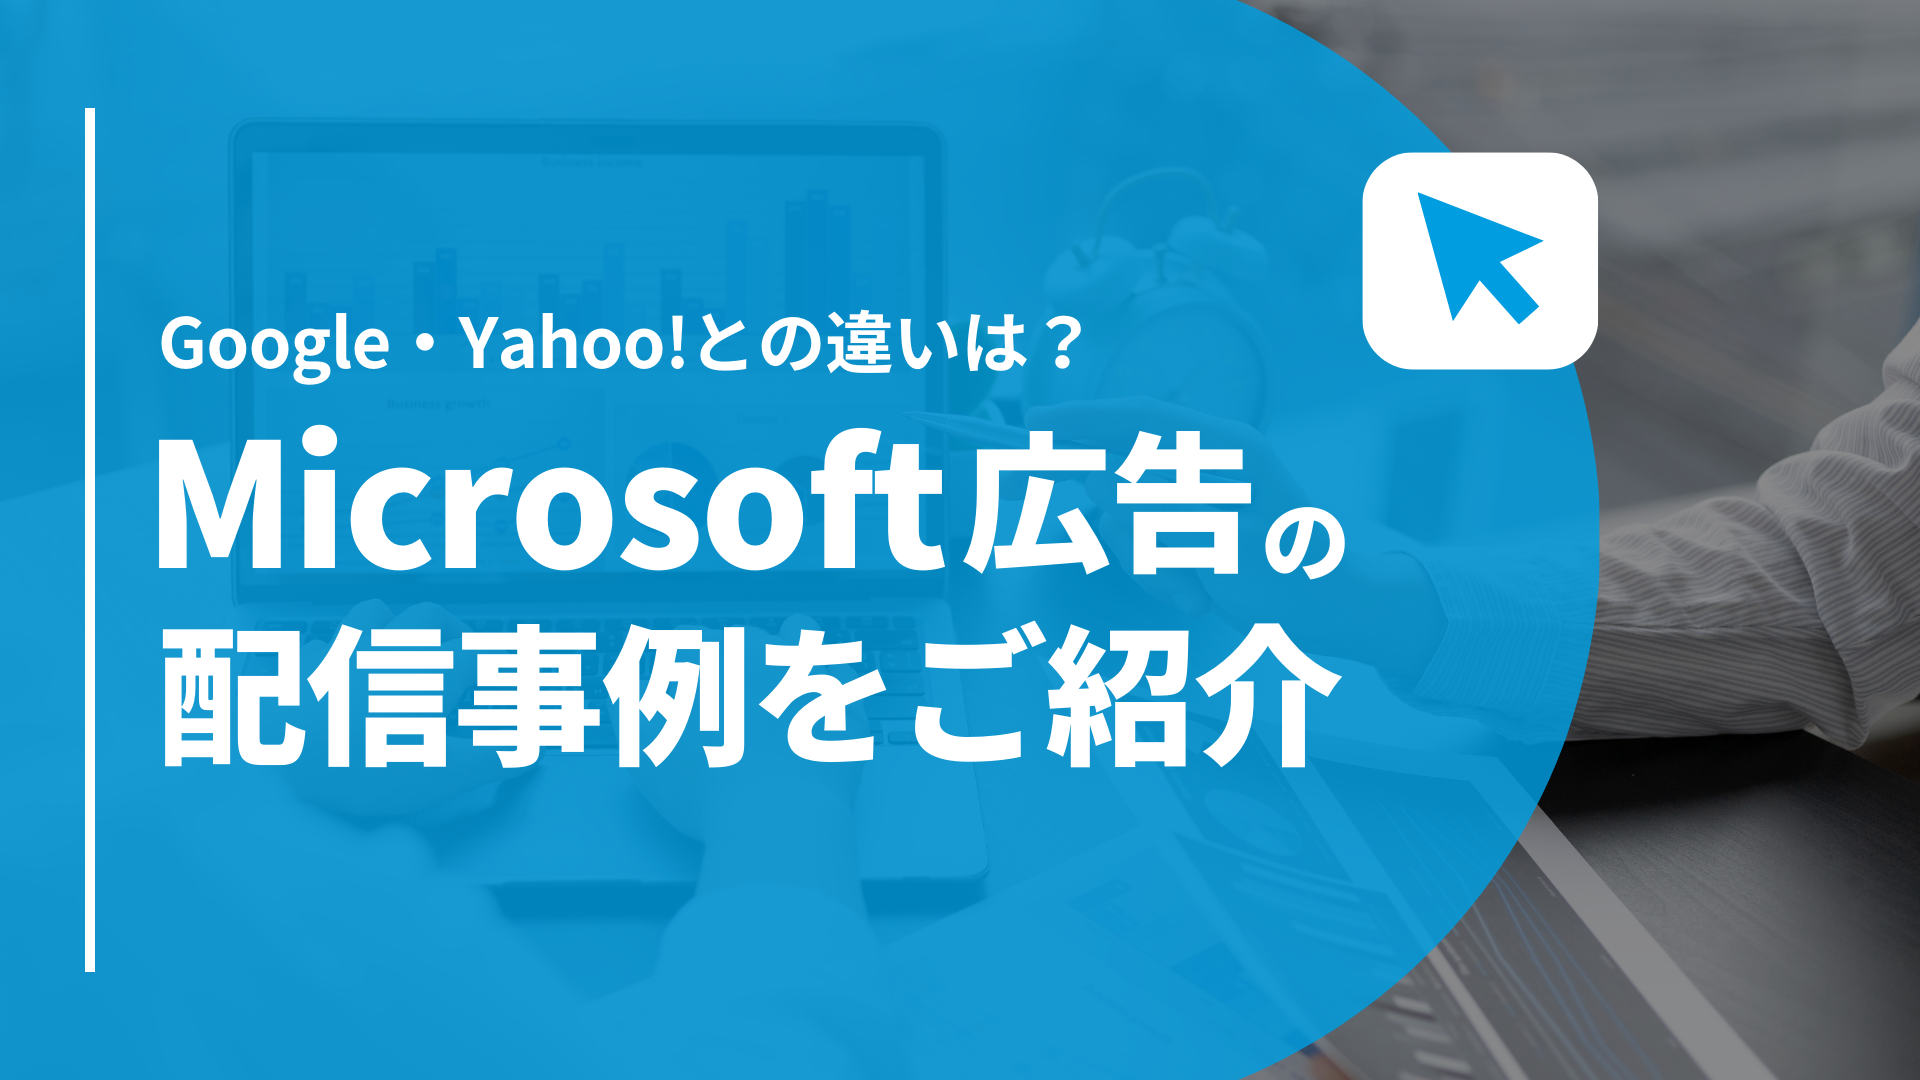 Microsoft広告_配信事例_アイキャッチ